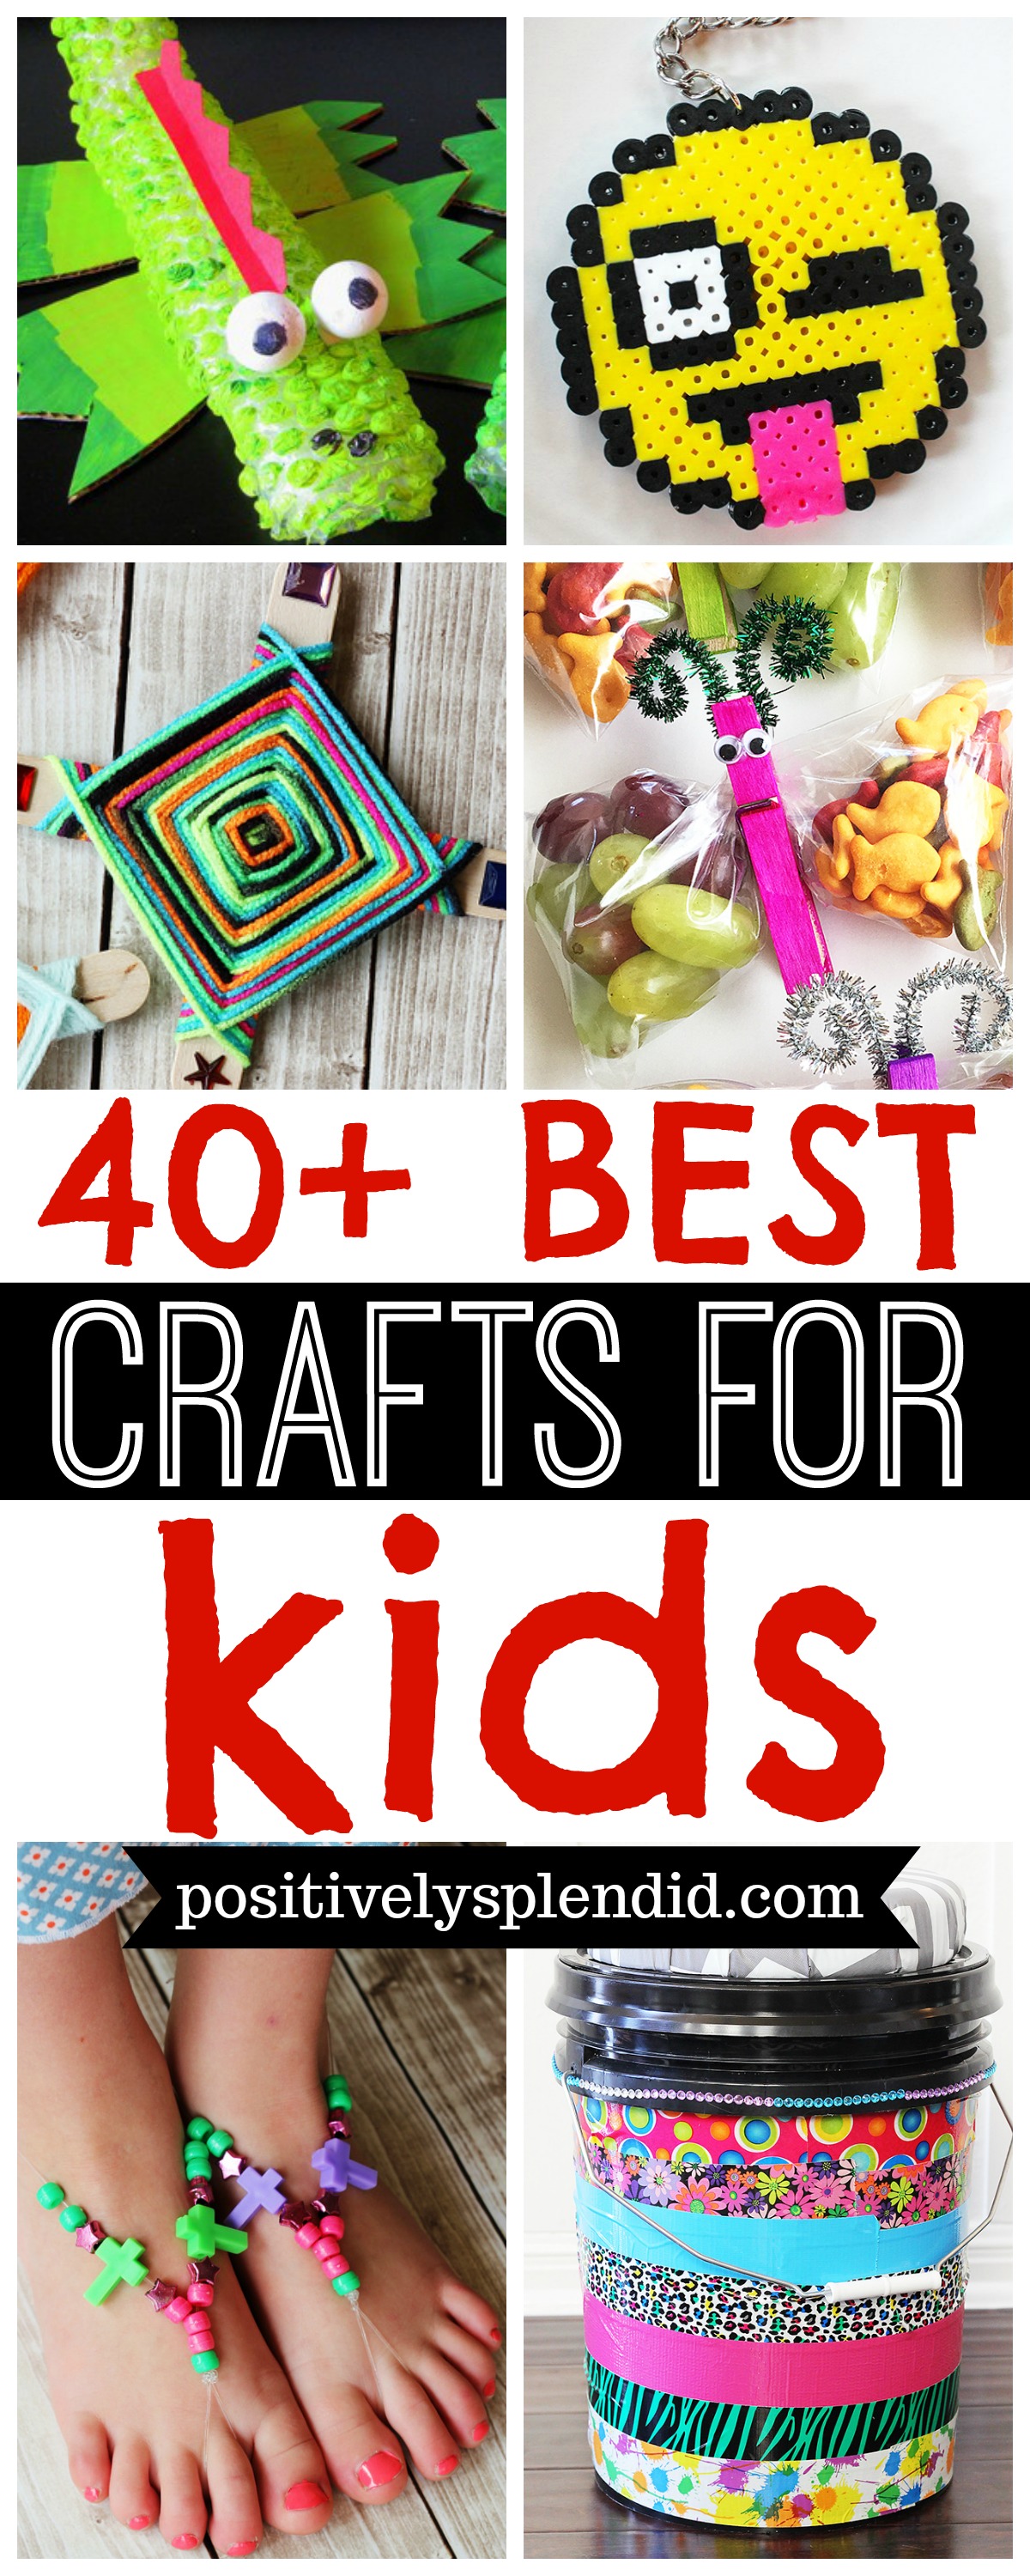 https://www.positivelysplendid.com/wp-content/uploads/2018/05/Best-Kids-Craft-Ideas.jpg